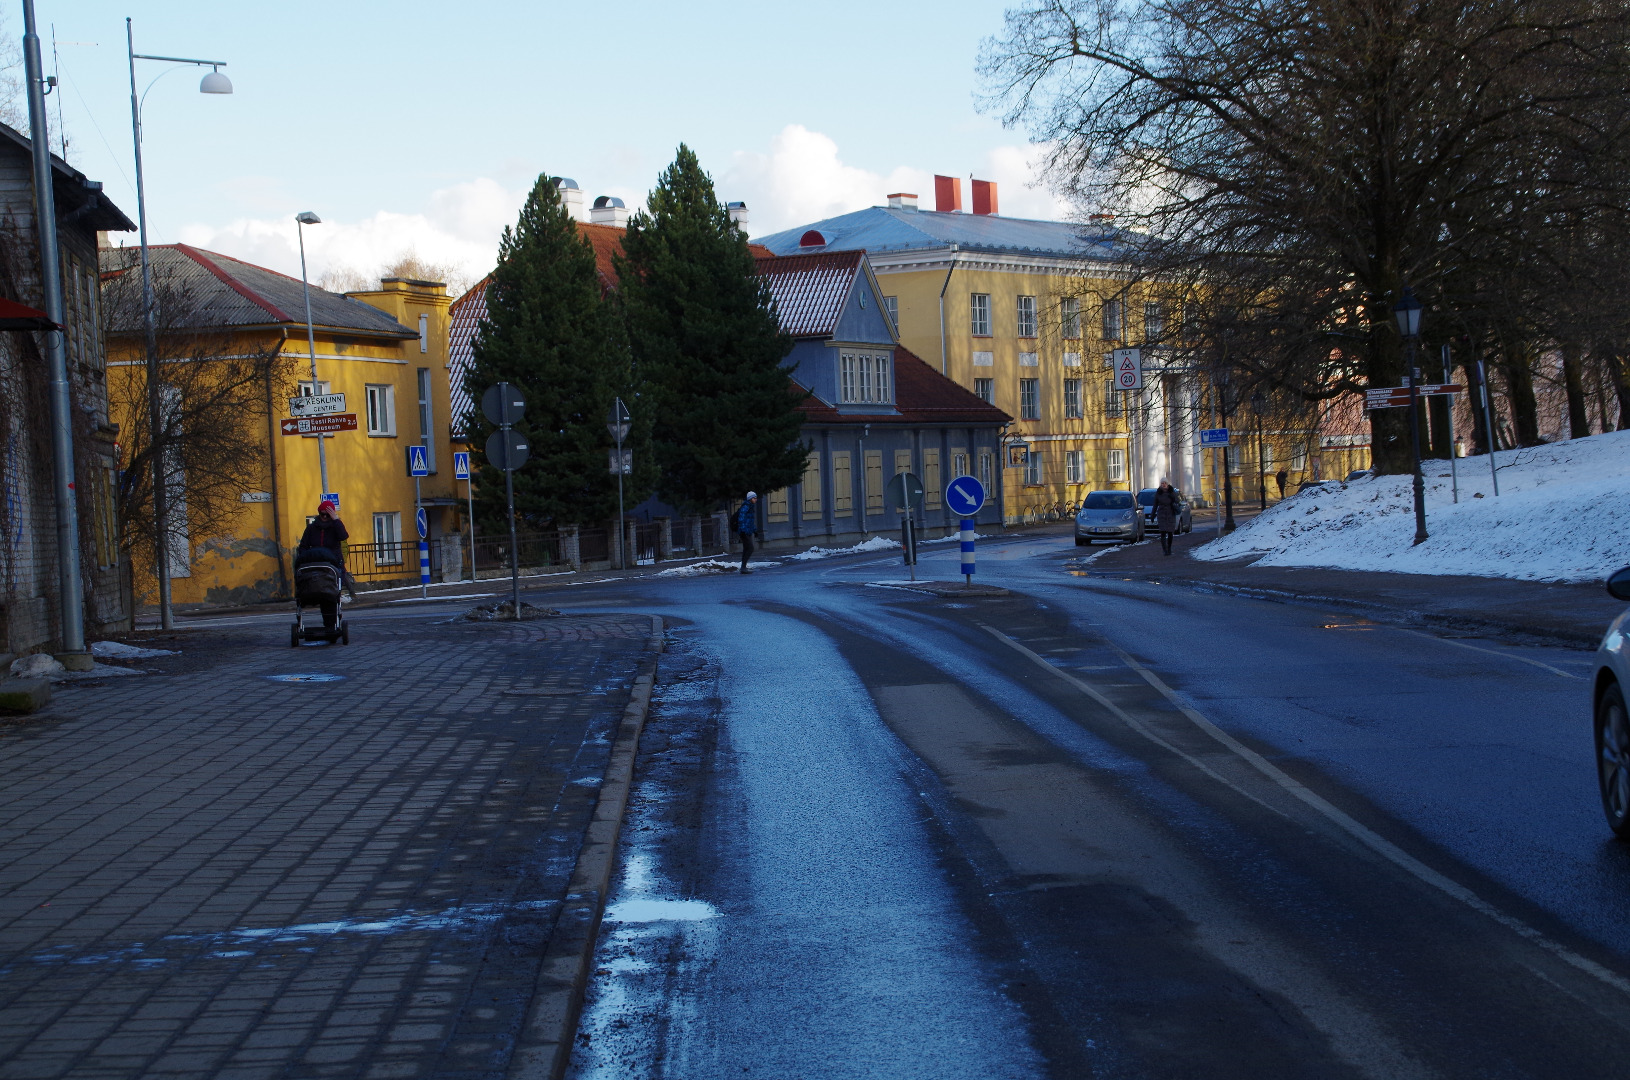 Sewerage works in Tartu City rephoto